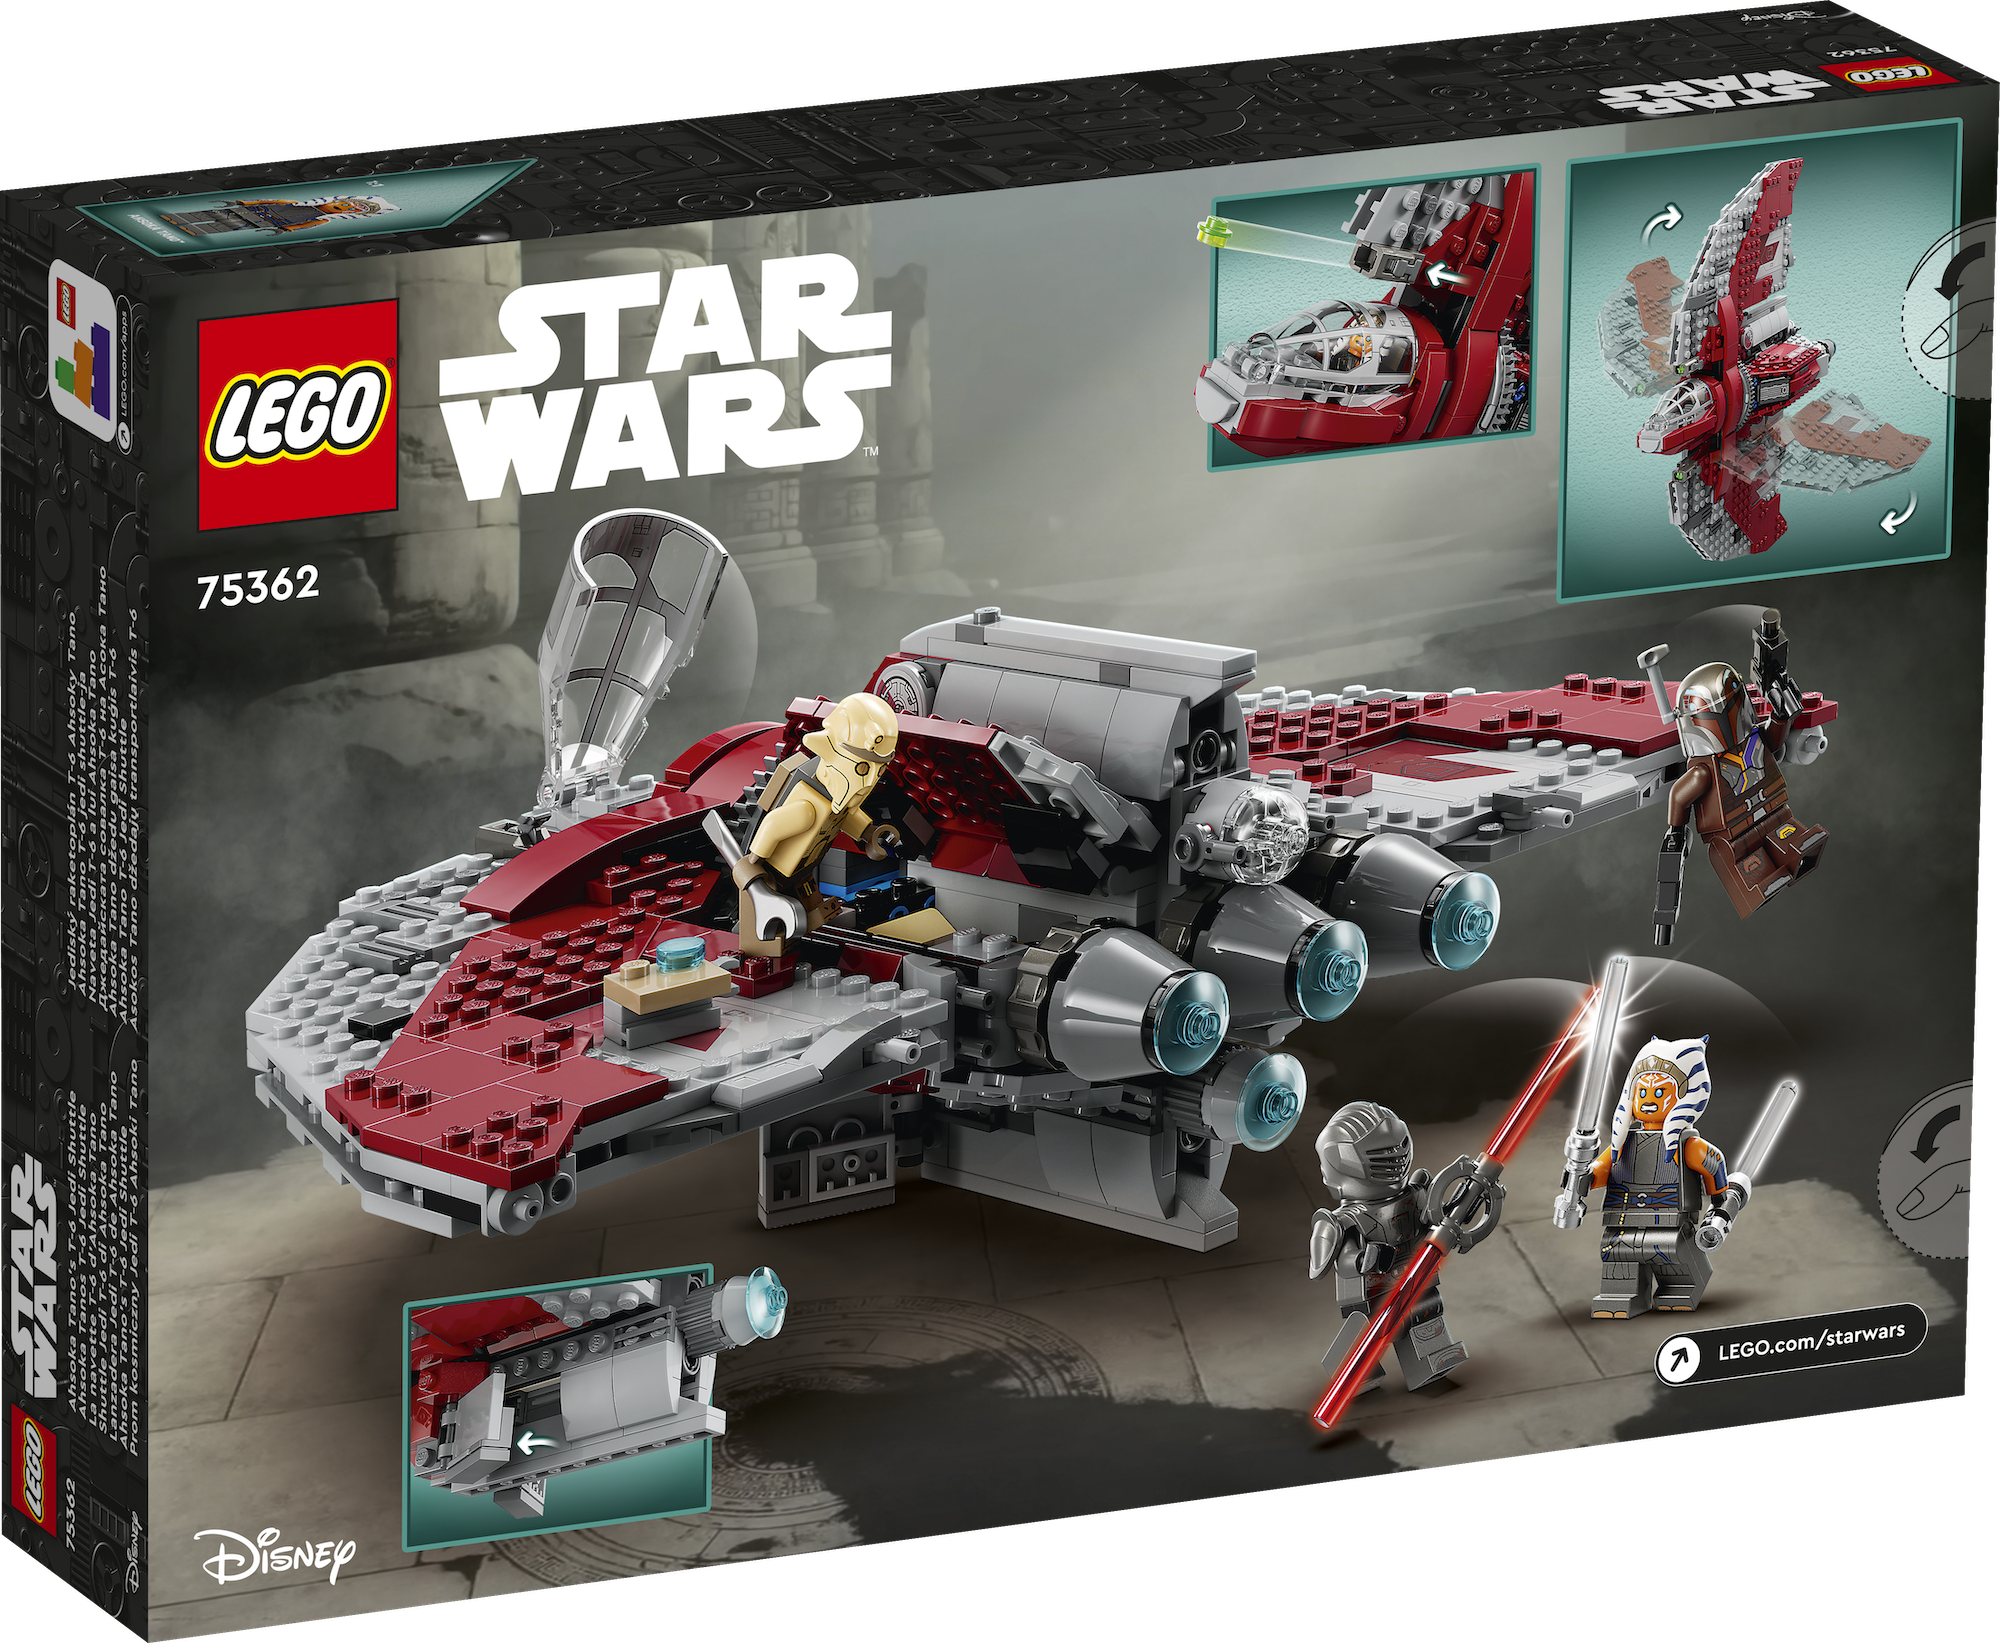 LEGO Marvel Sets for January 2024 Revealed - Jedi News